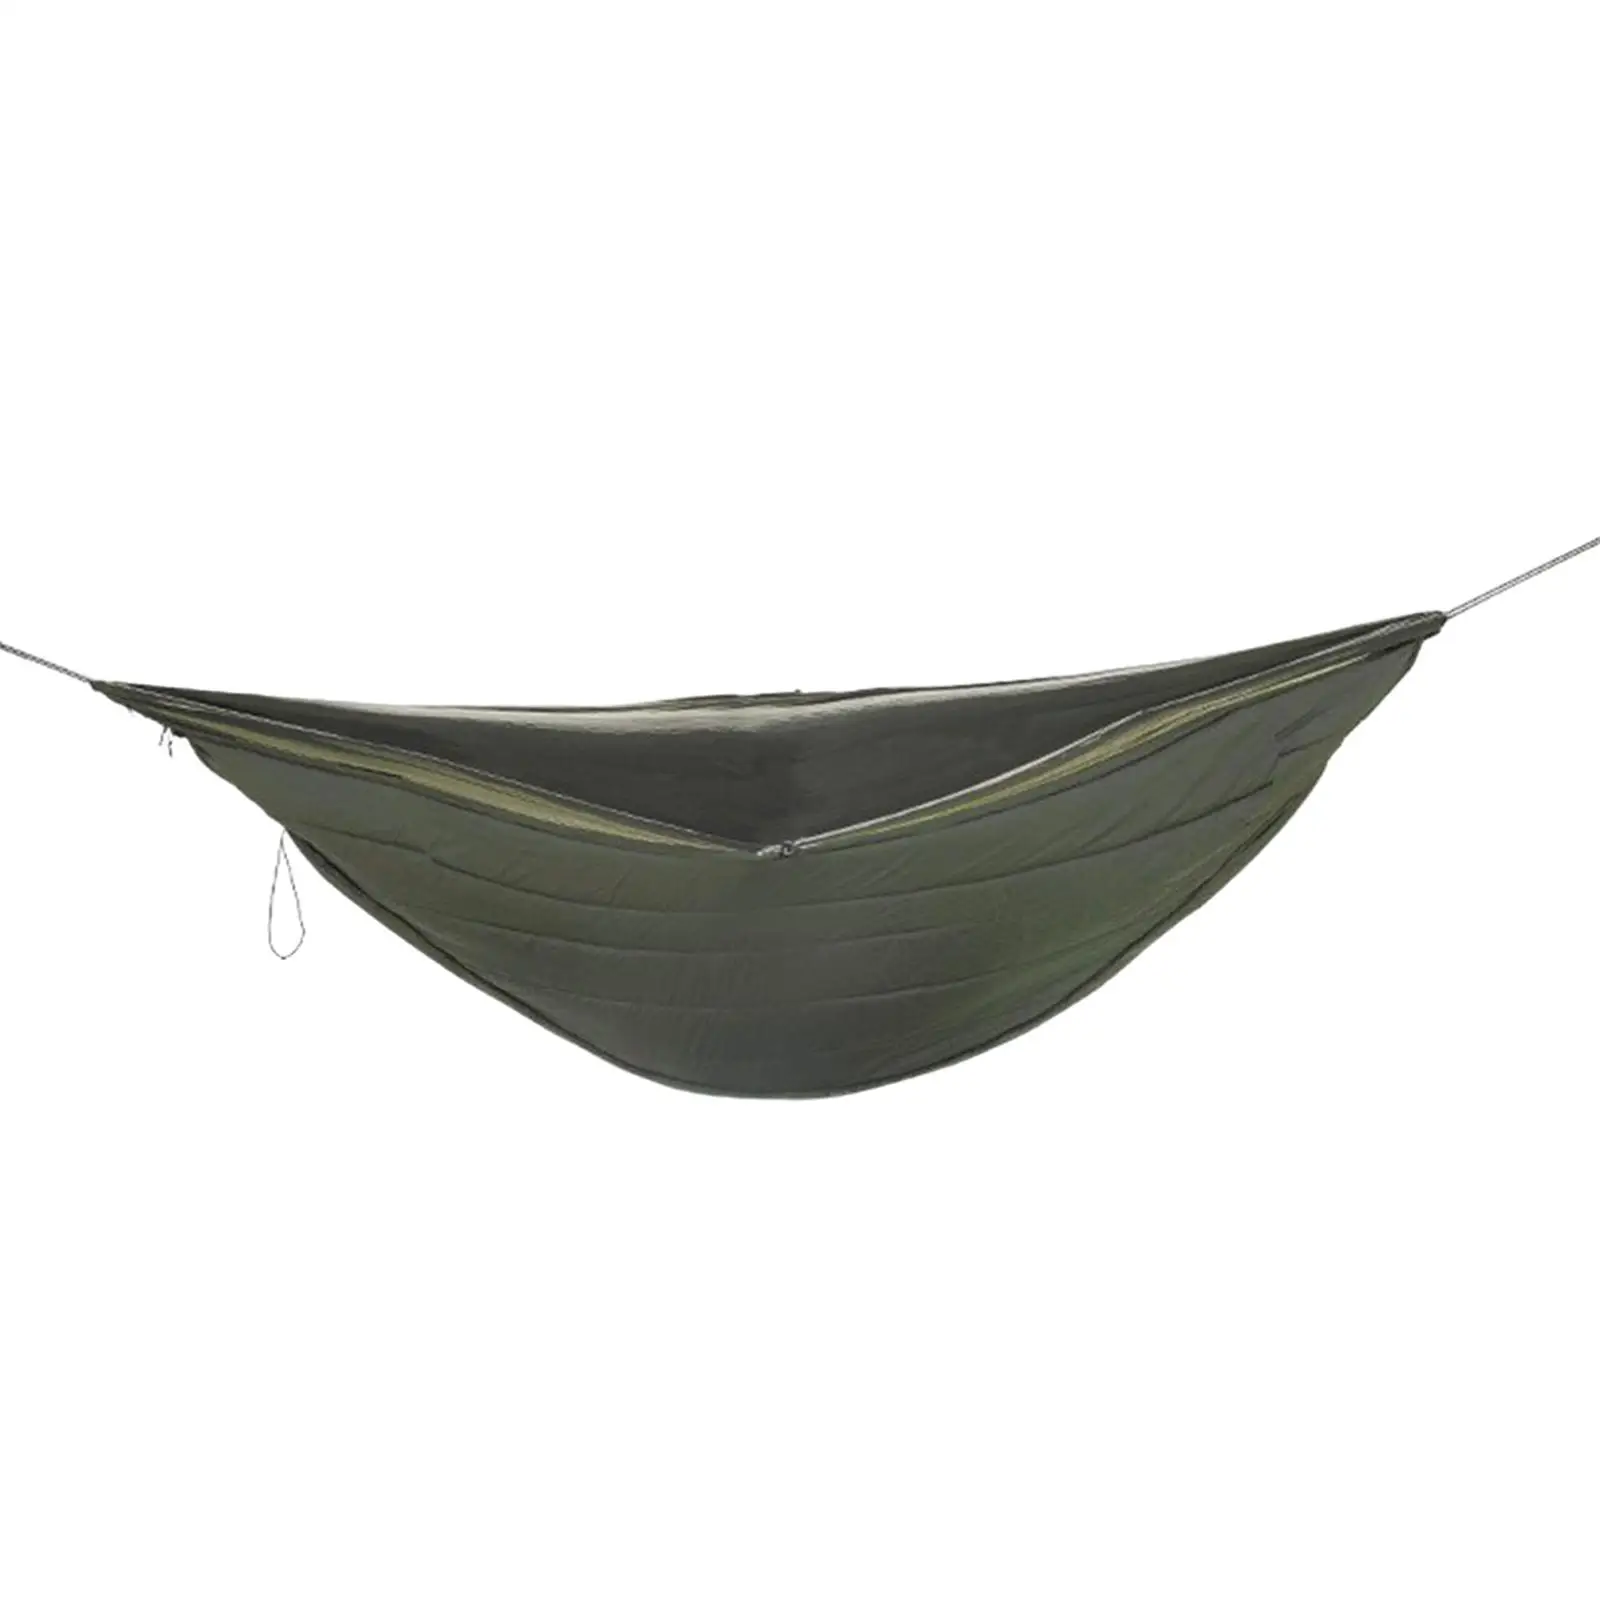 Hammock Underquilt Large Under Blanket Camping Sleeping Bag for Hiking